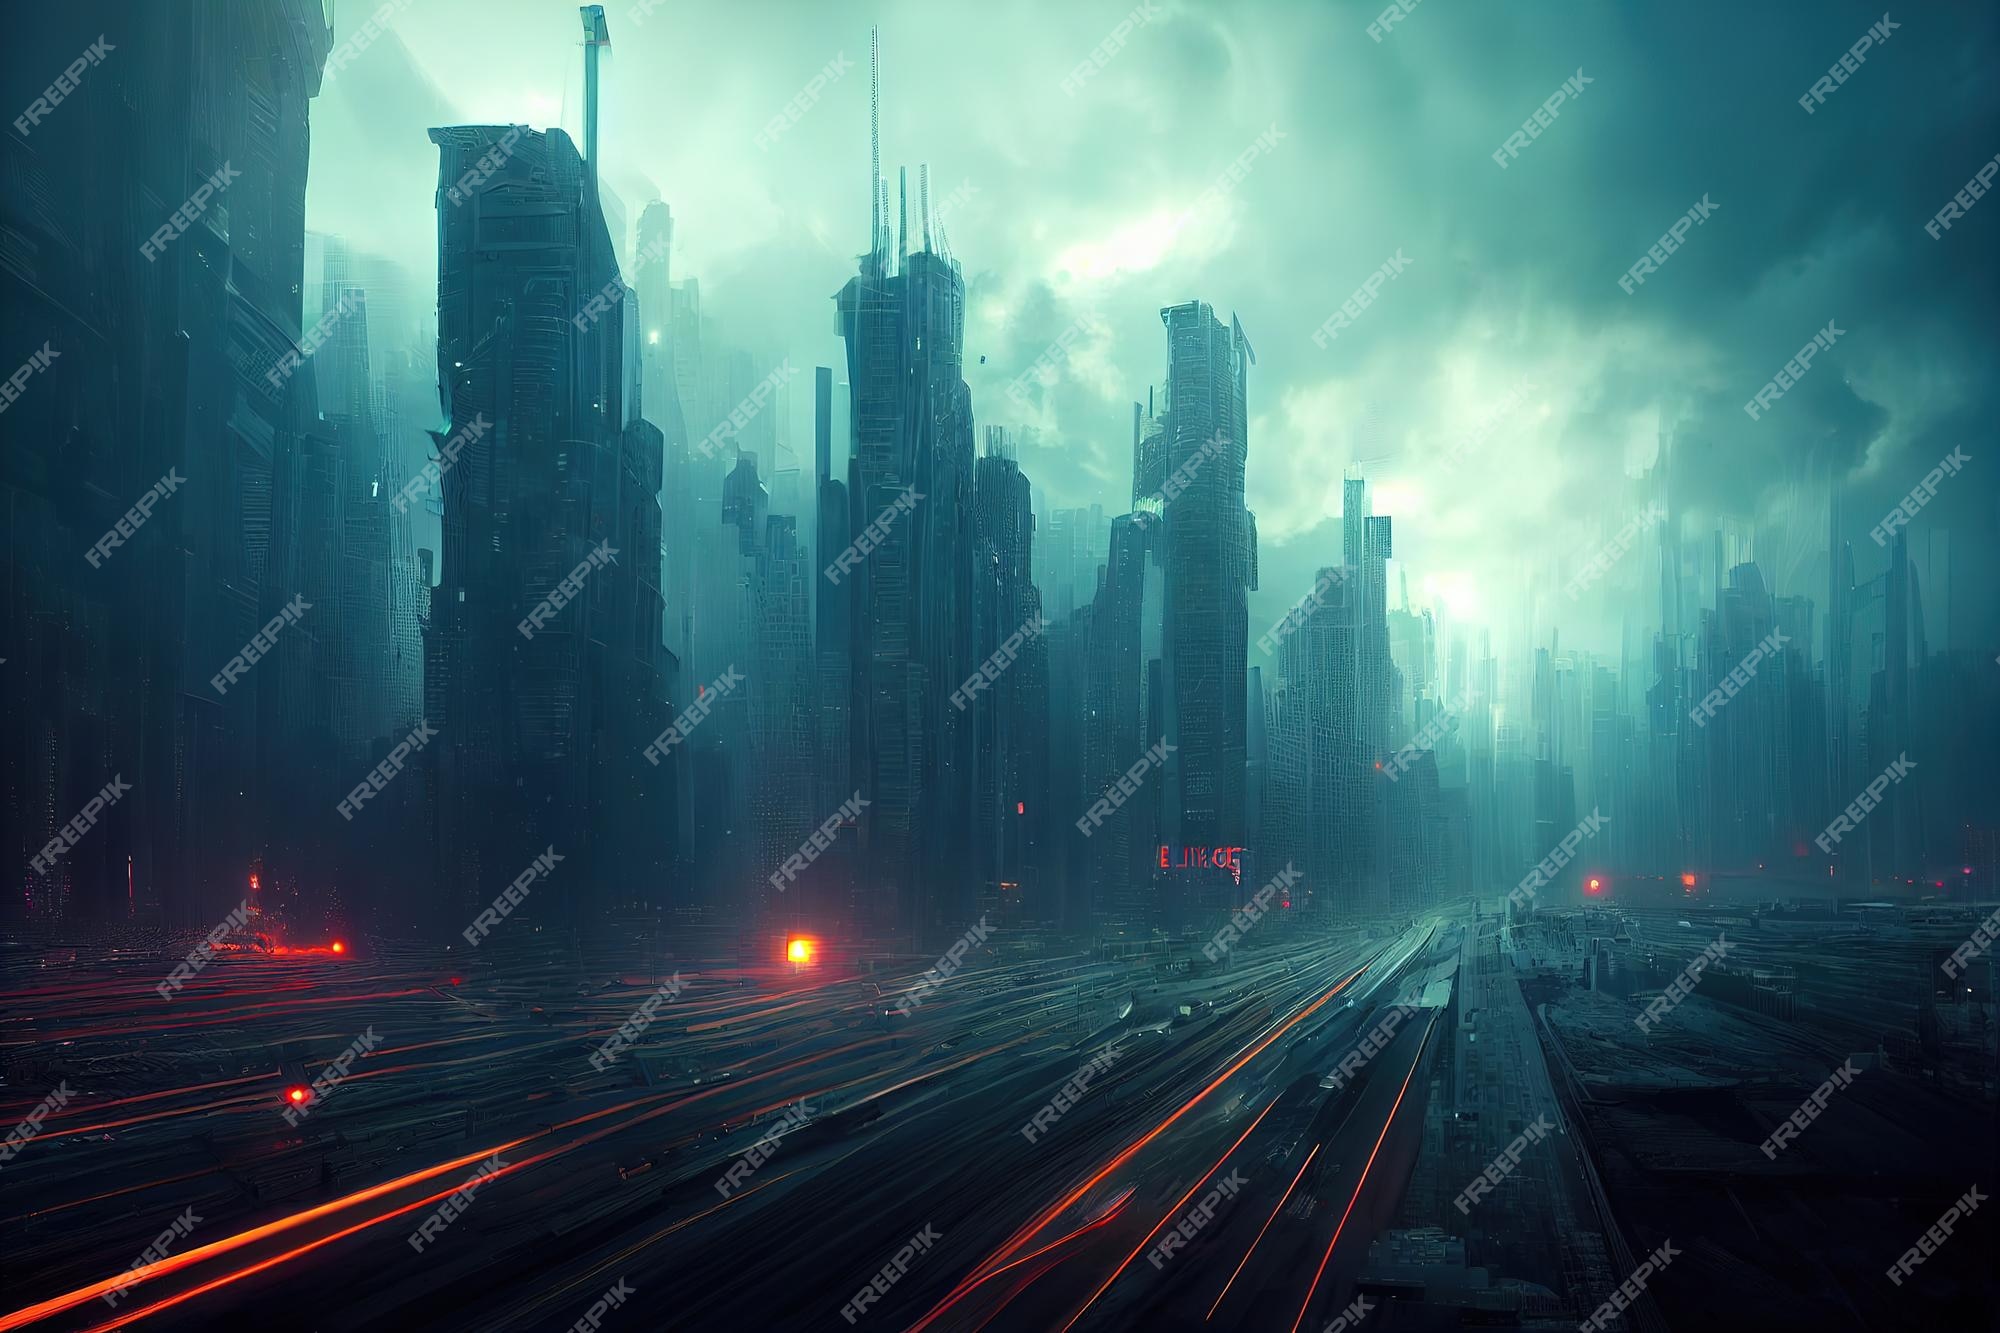 Premium Photo | City wallpaper dystopian futuristic cyberpunk city at night  3d rendering raster illustration